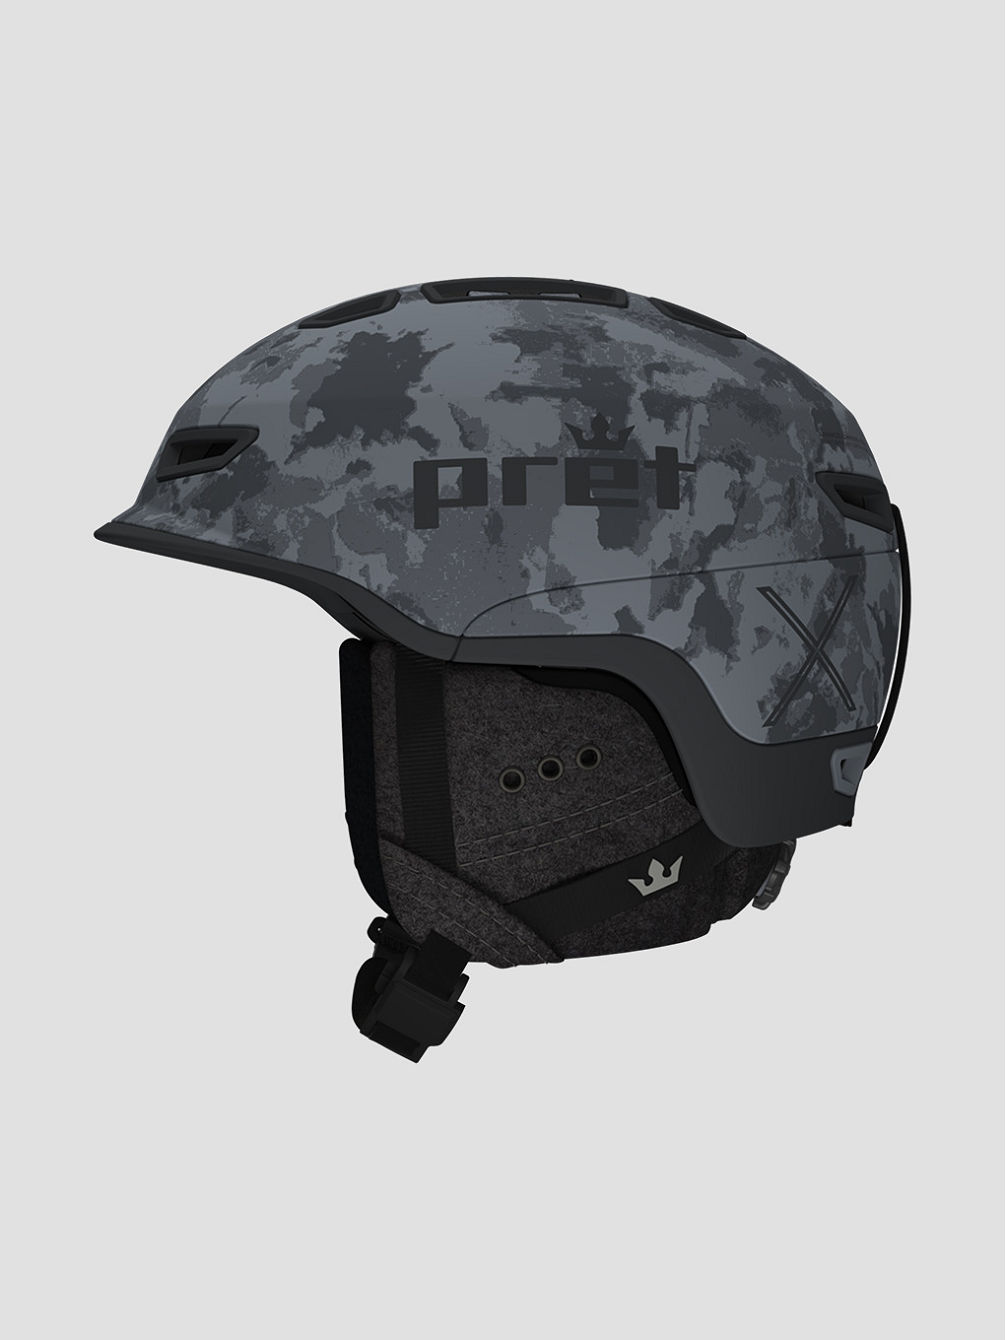 Fury X Helmet